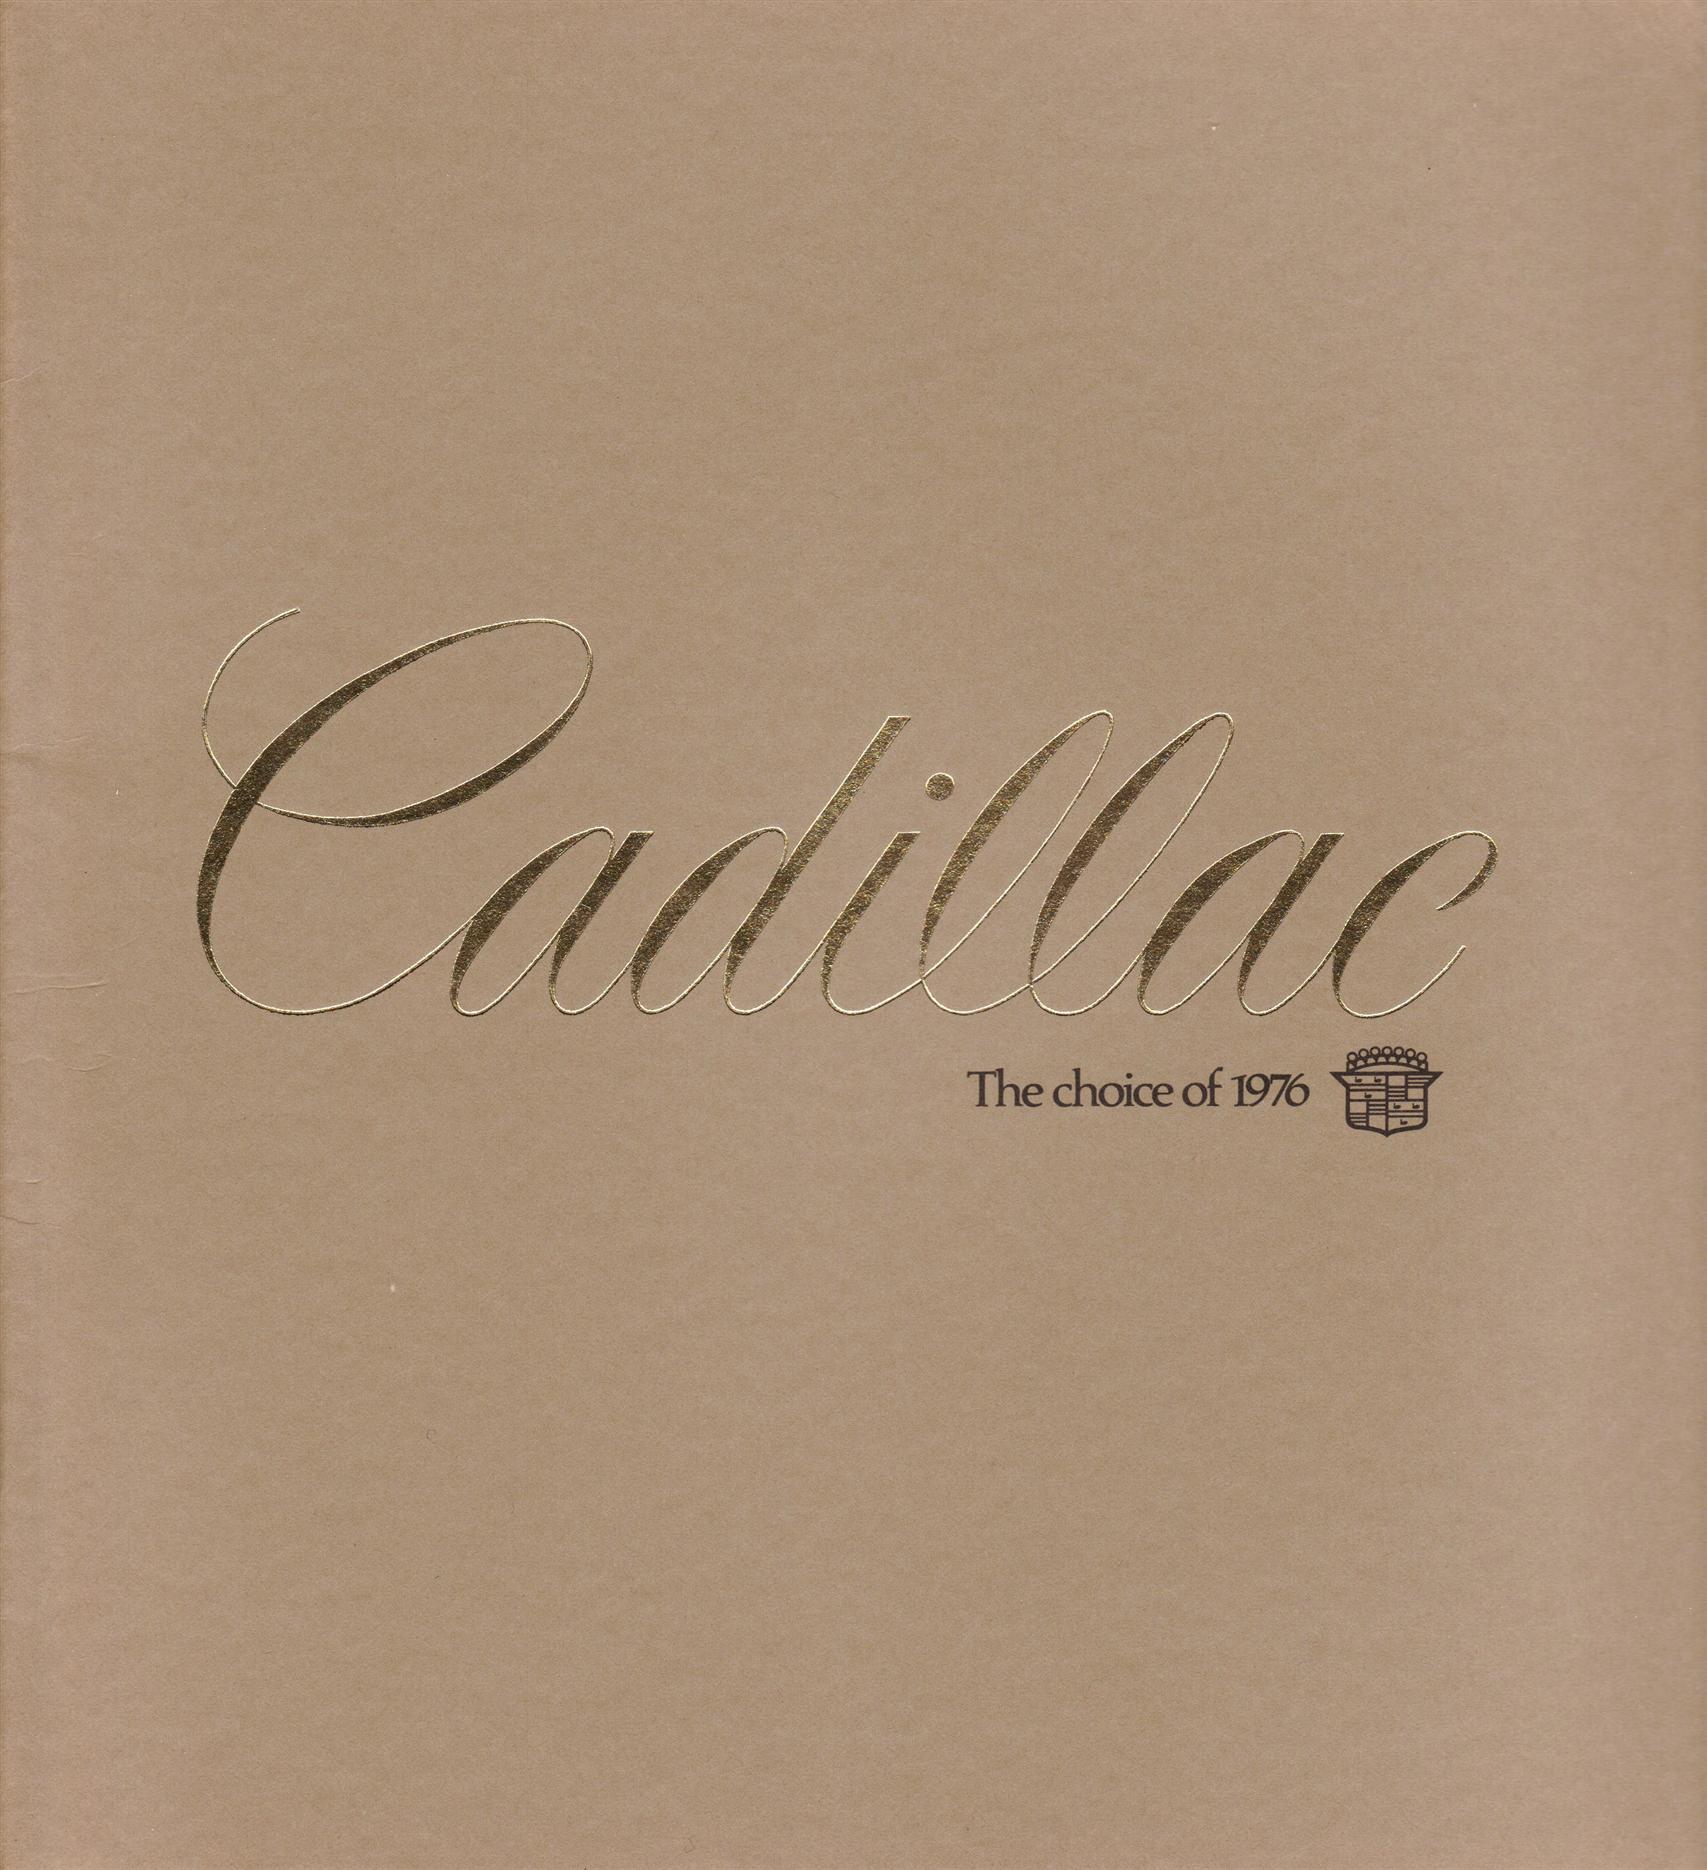 1976 Cadillac cover